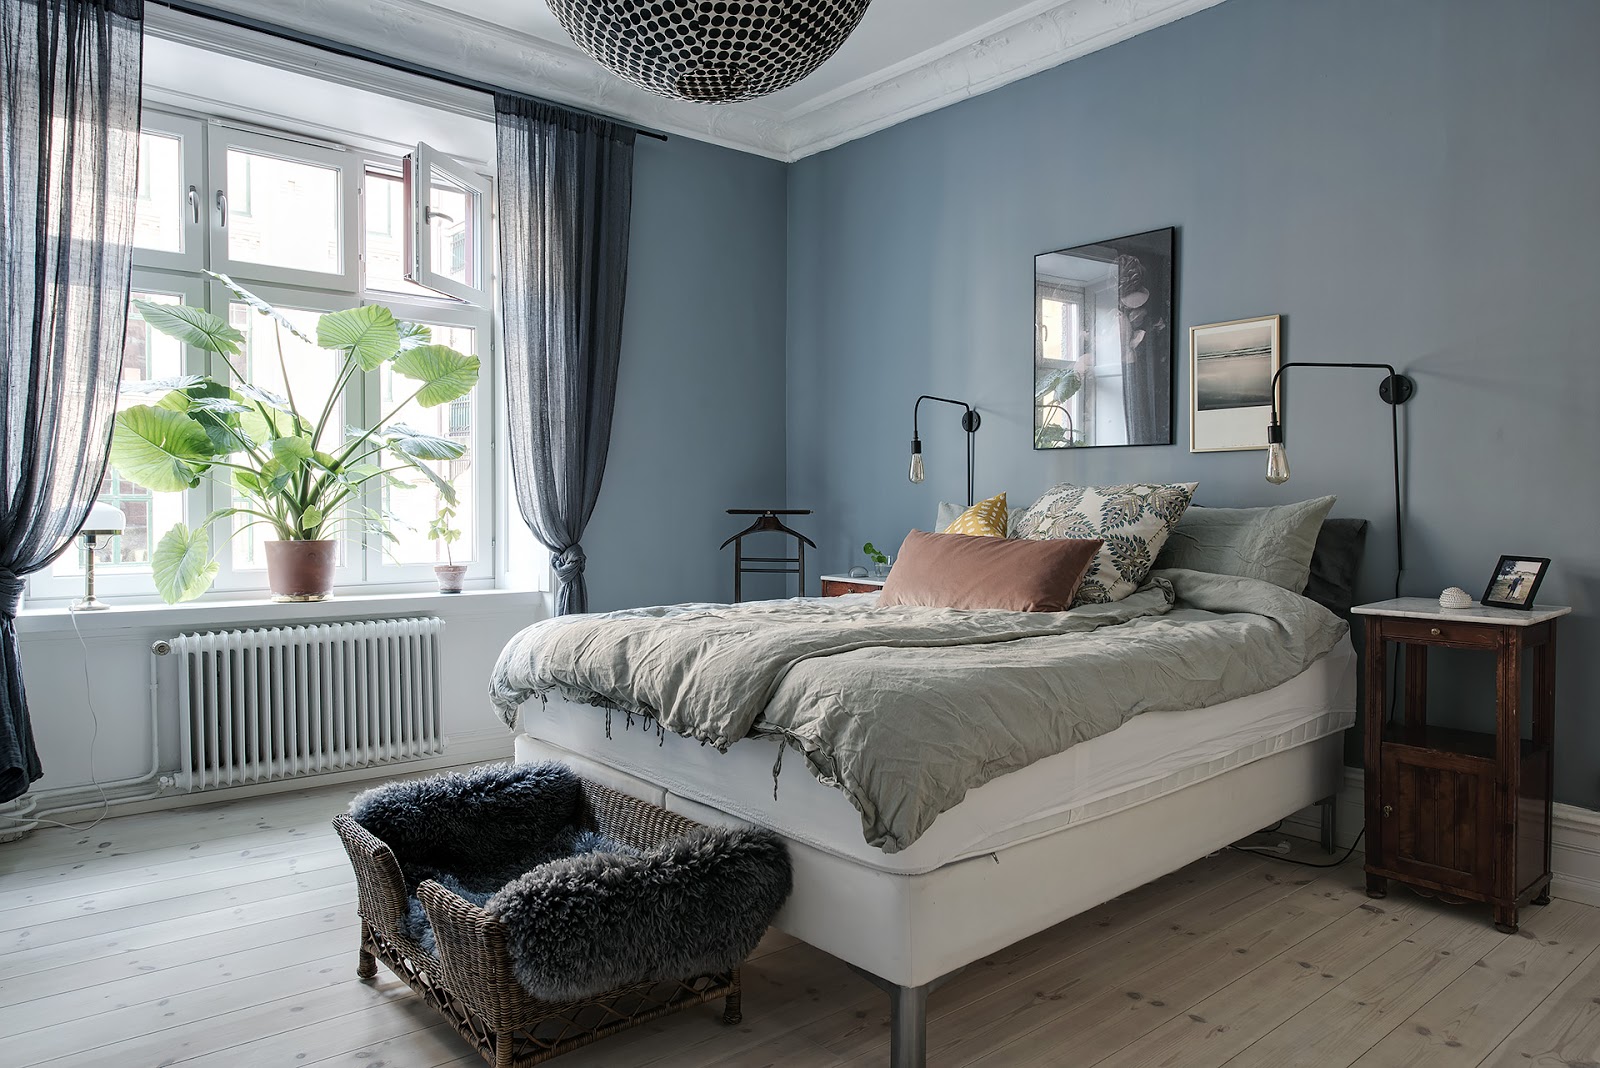 [Deco] Un interior en azul con acento parisino – Virlova Style